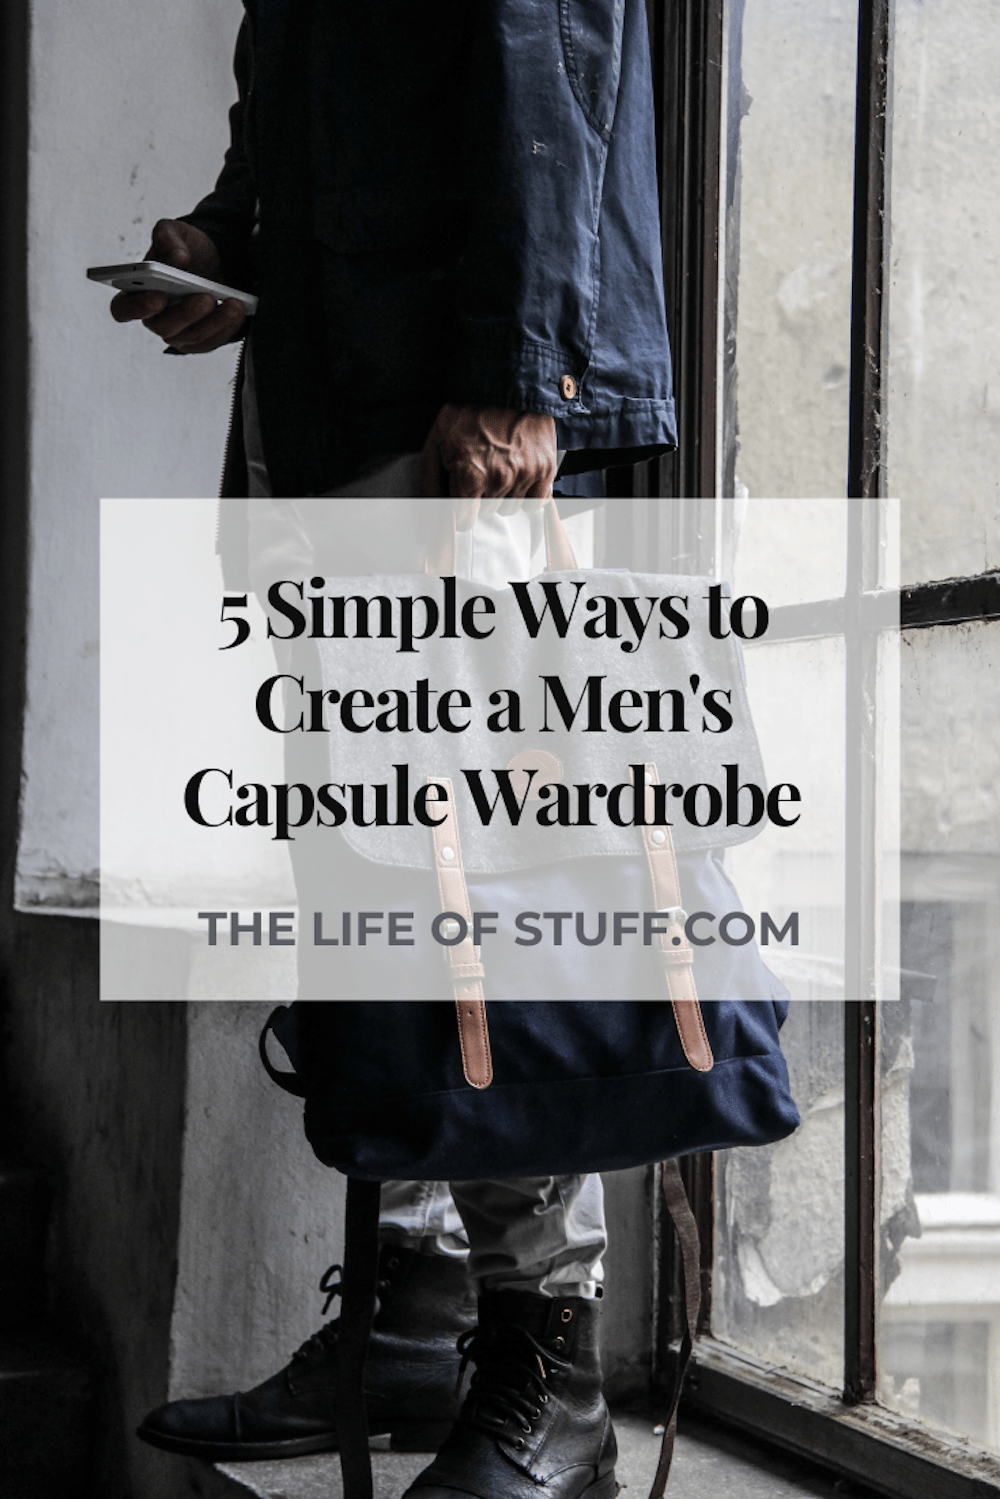 5 Simple Ways to Create a Men's Capsule Wardrobe - The Life of Stuff.com